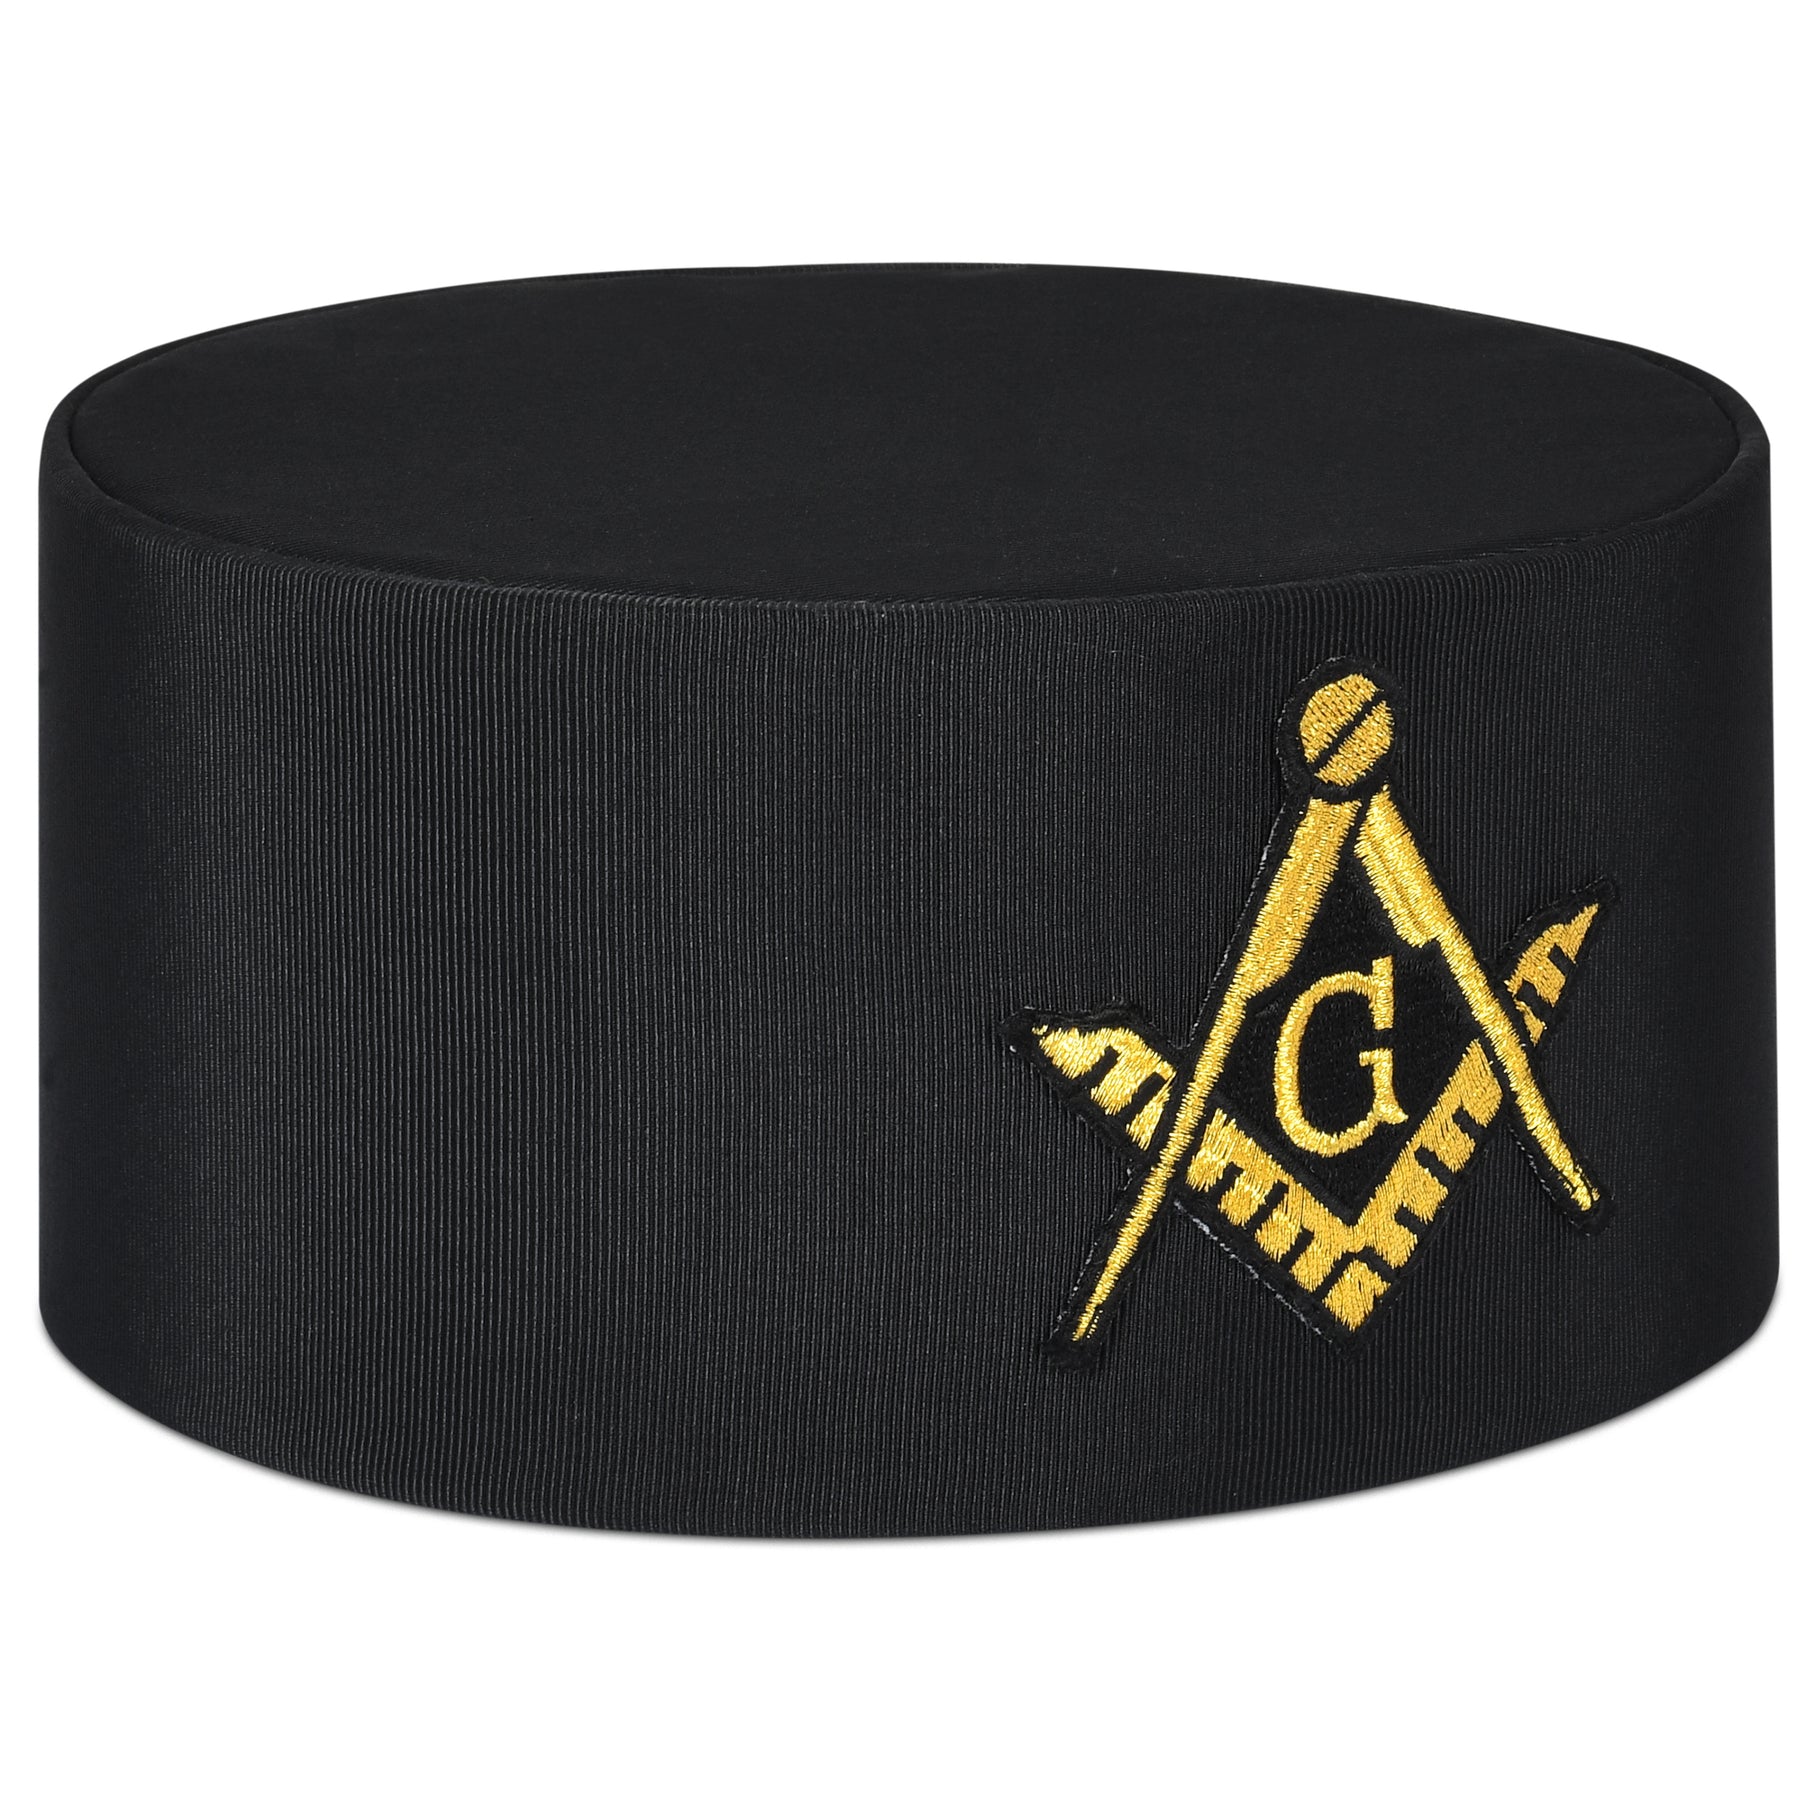 Master Mason Blue Lodge Crown Cap - Black rayon - Bricks Masons